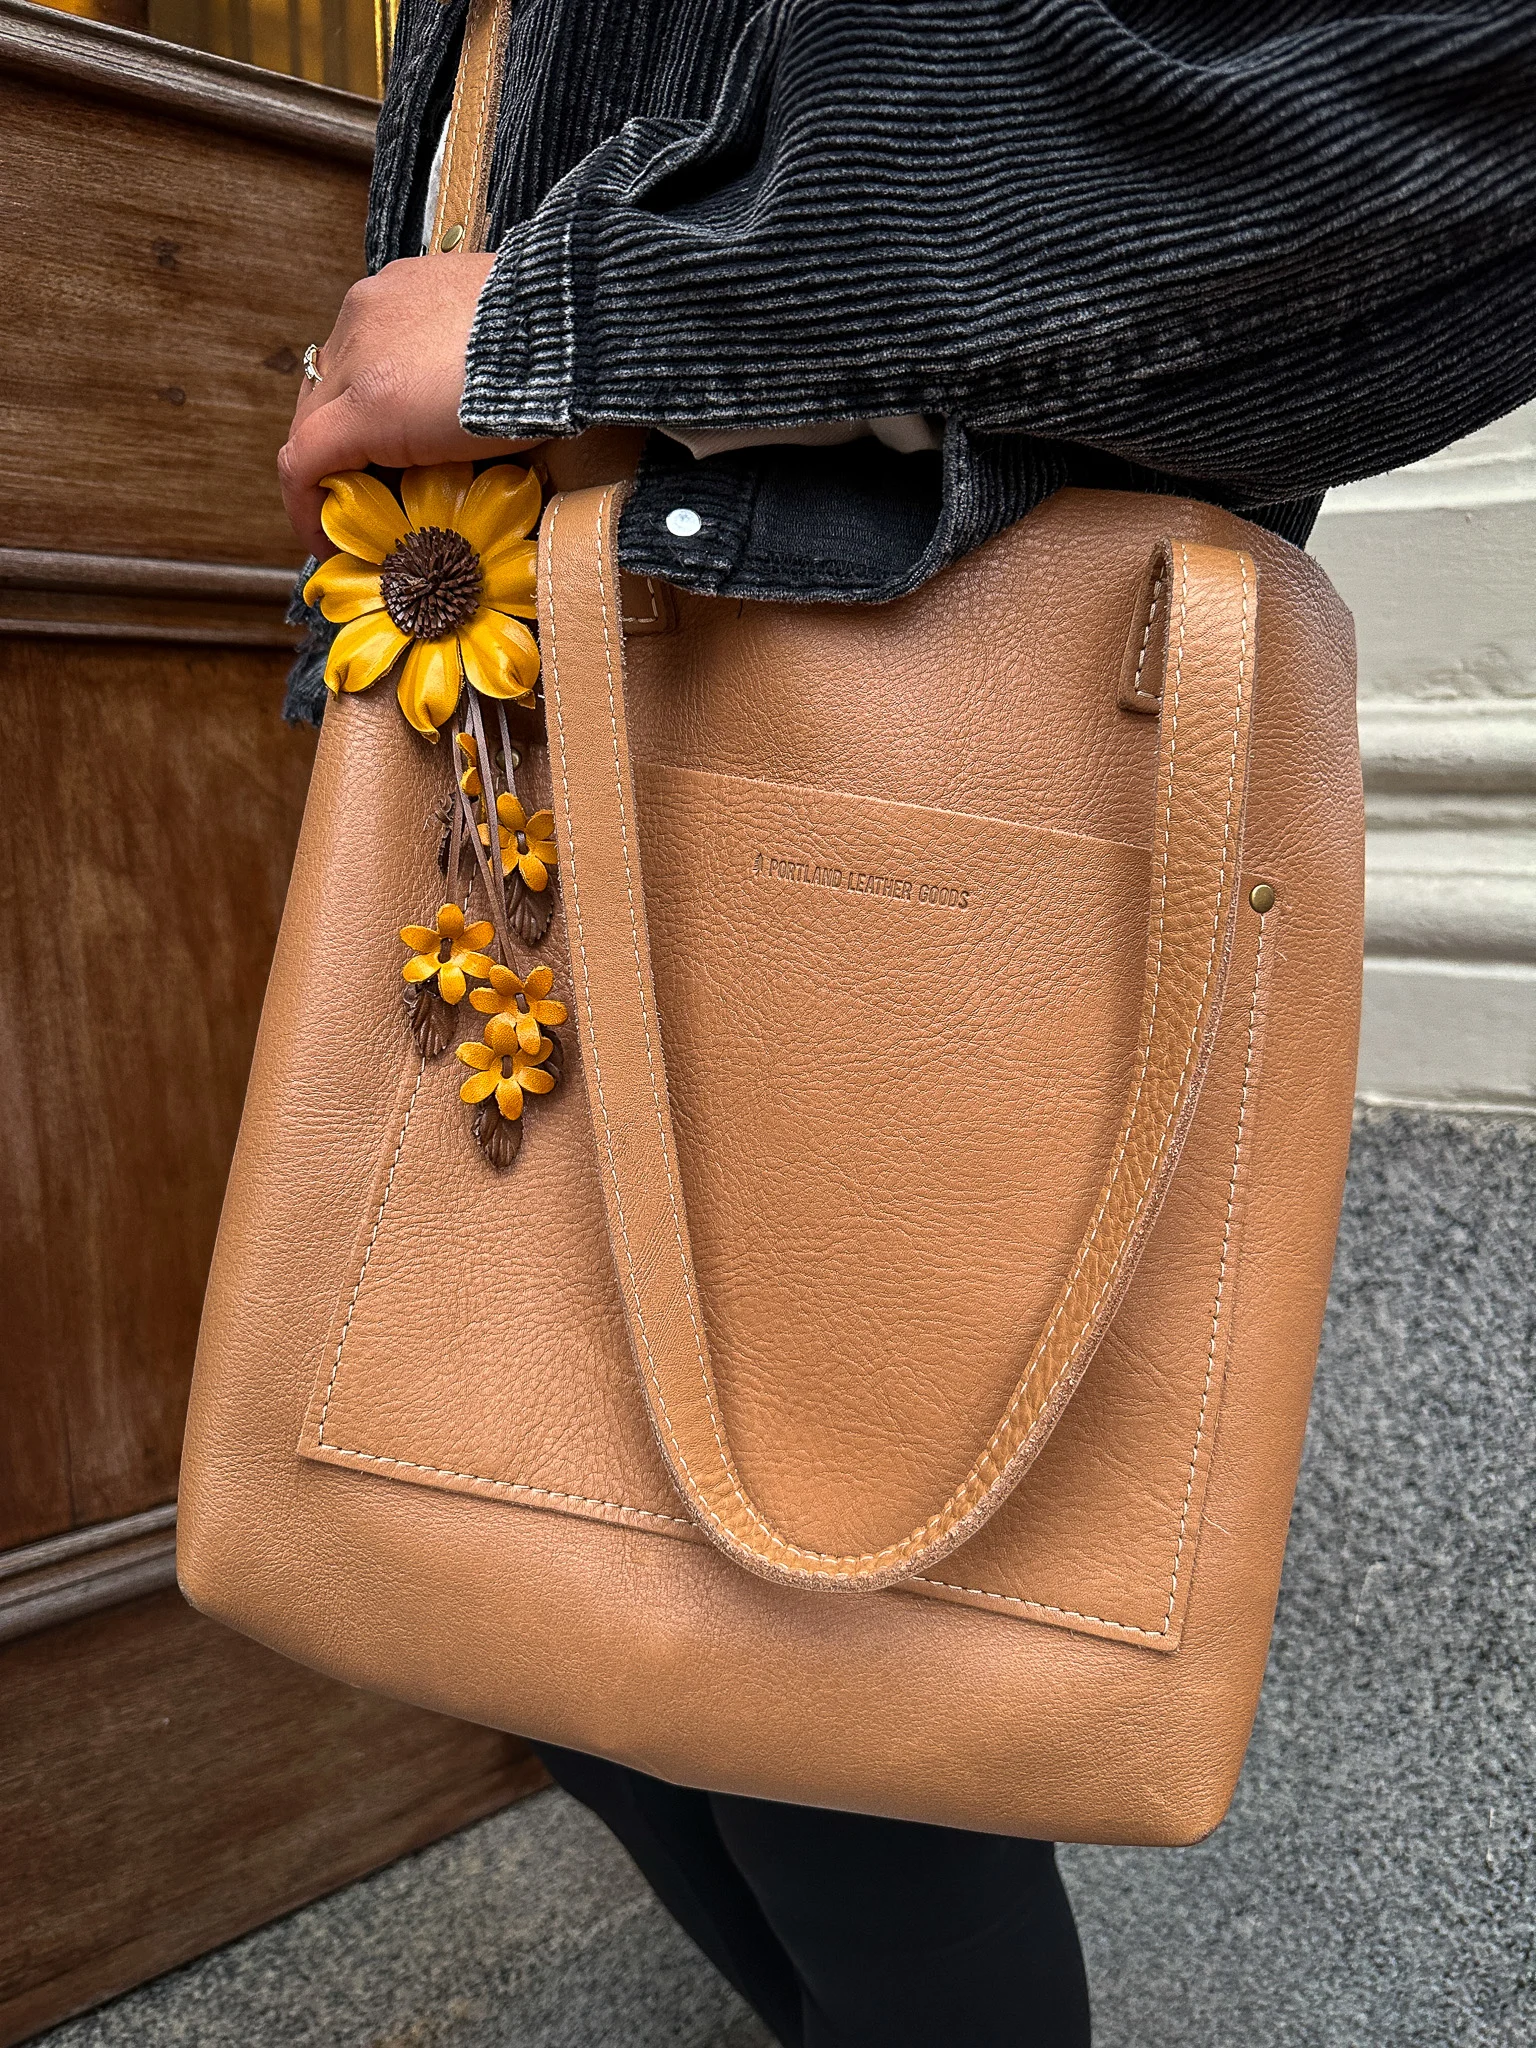 Best Leather Handbag Brands for Traveling - Schimiggy Reviews